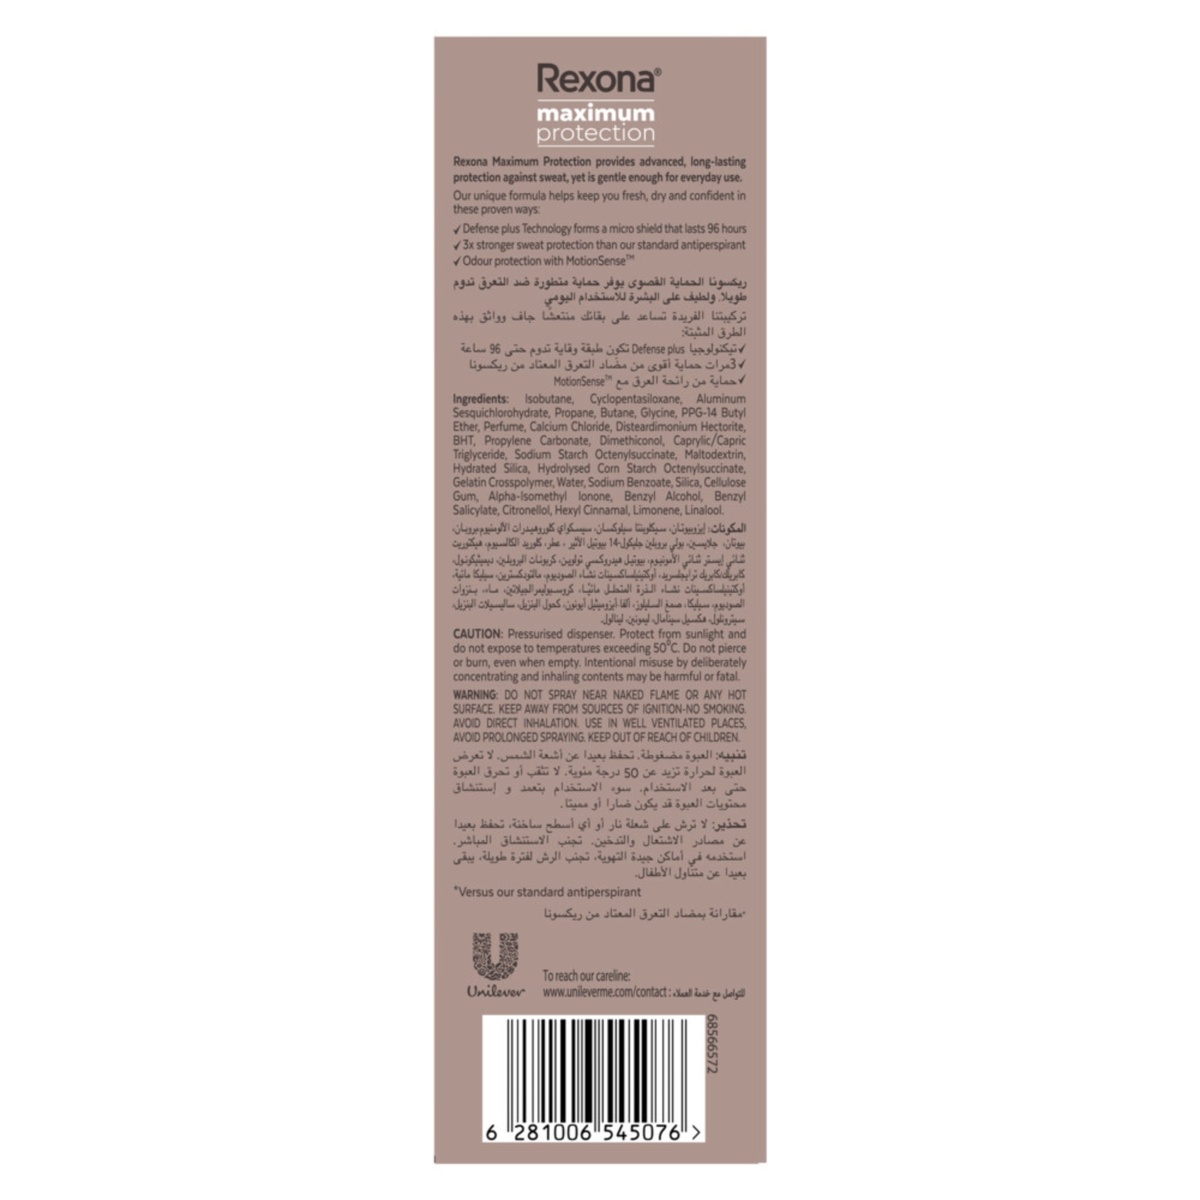 Rexona Extra Dry Antiperspirant Deodorant Spray For Women 150 ml